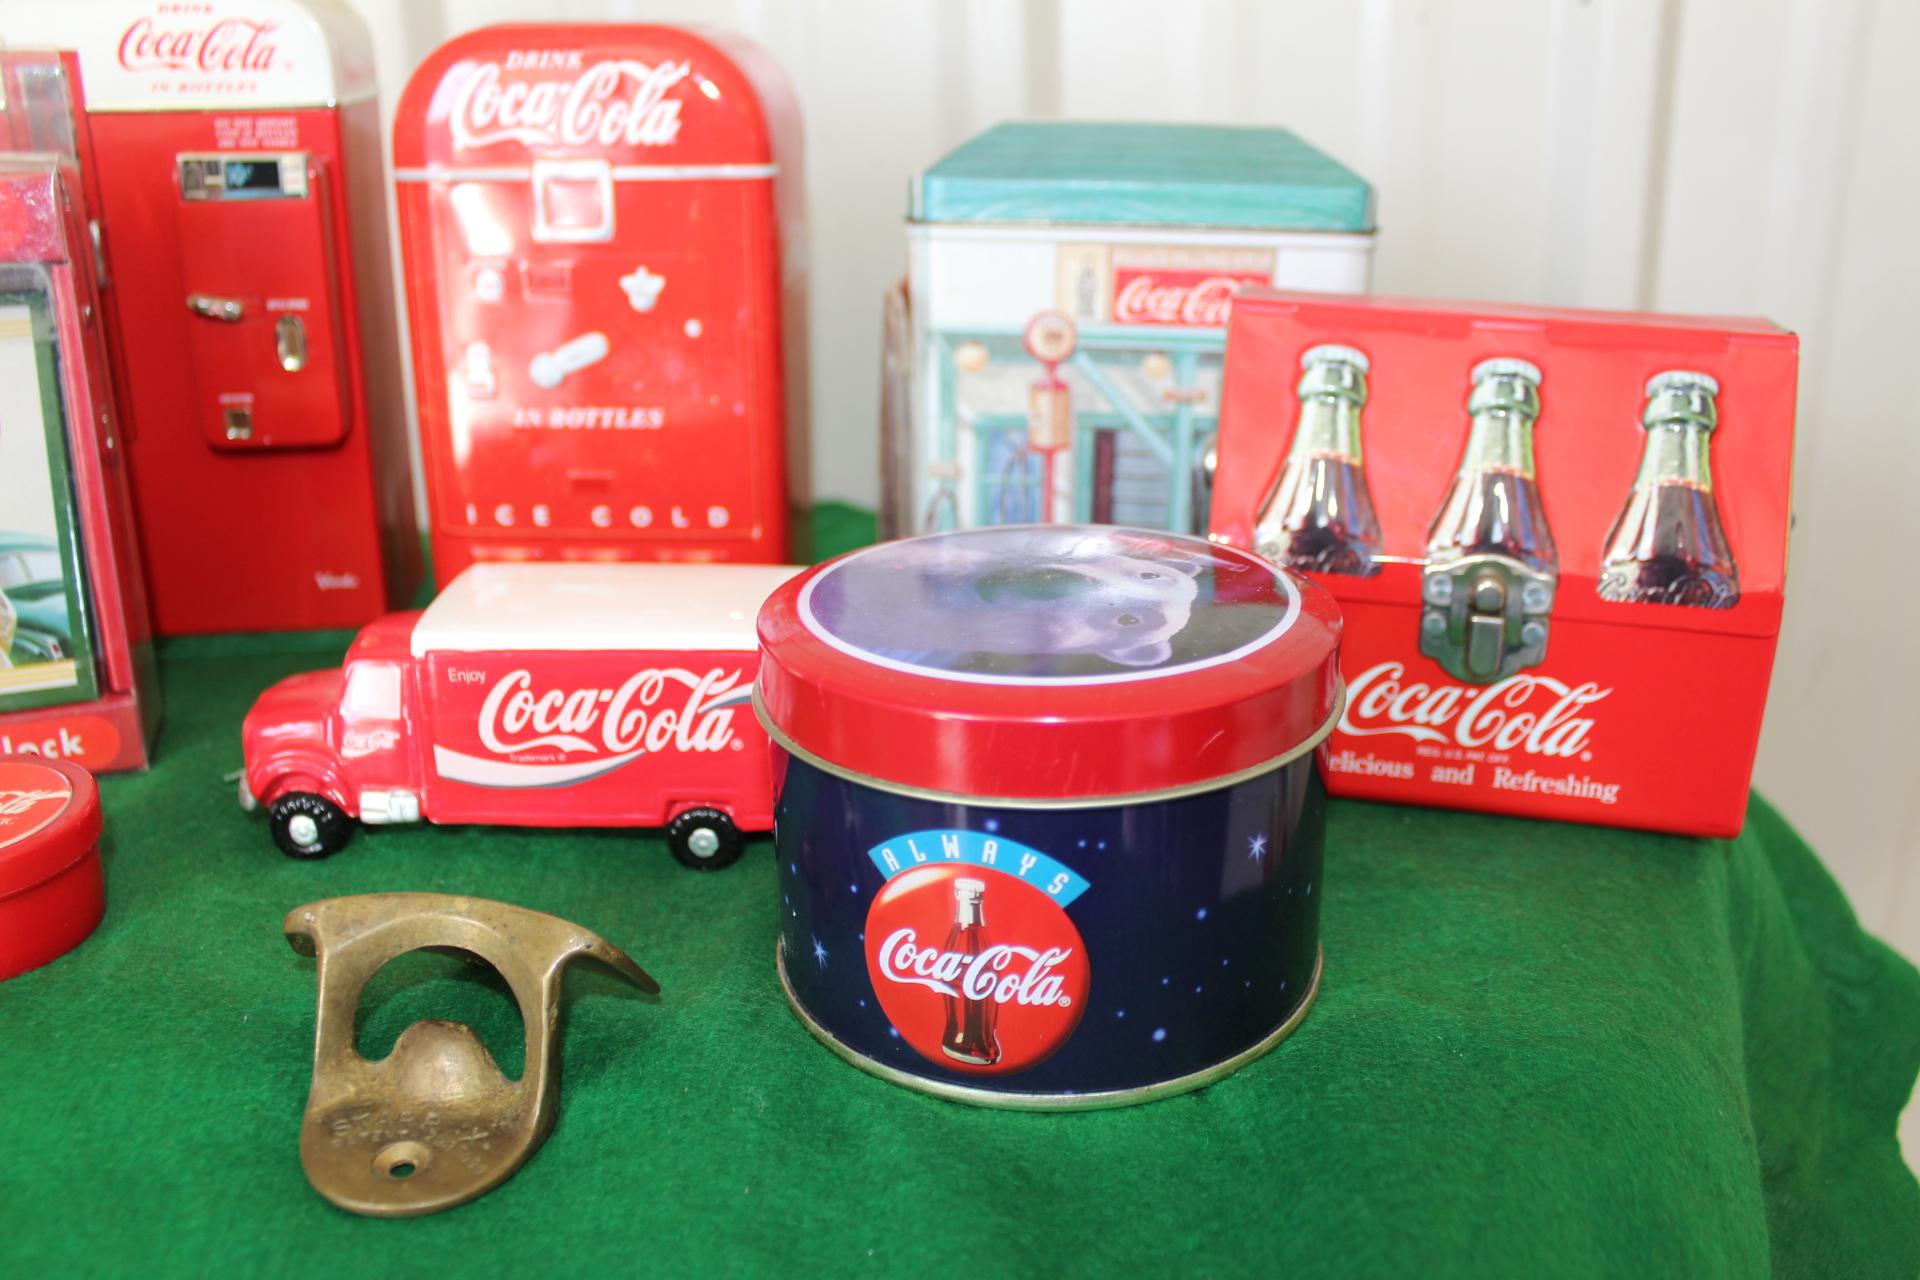 (14) Coca Cola memorabilia pieces, mug, truck, clock,